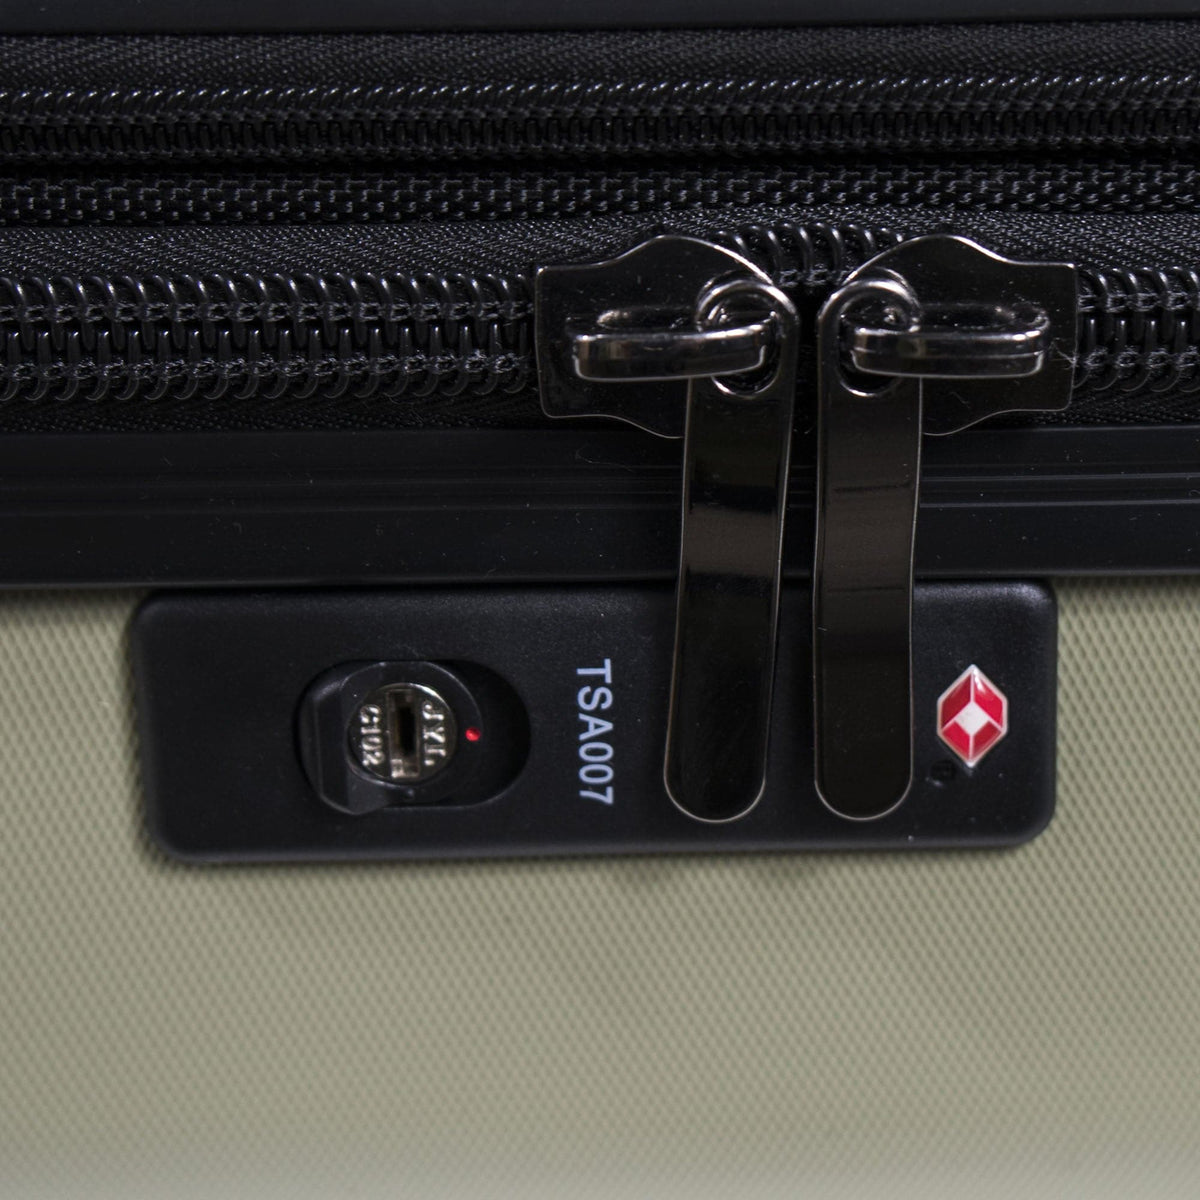 Sherpani Meridian Carry-On Luggage